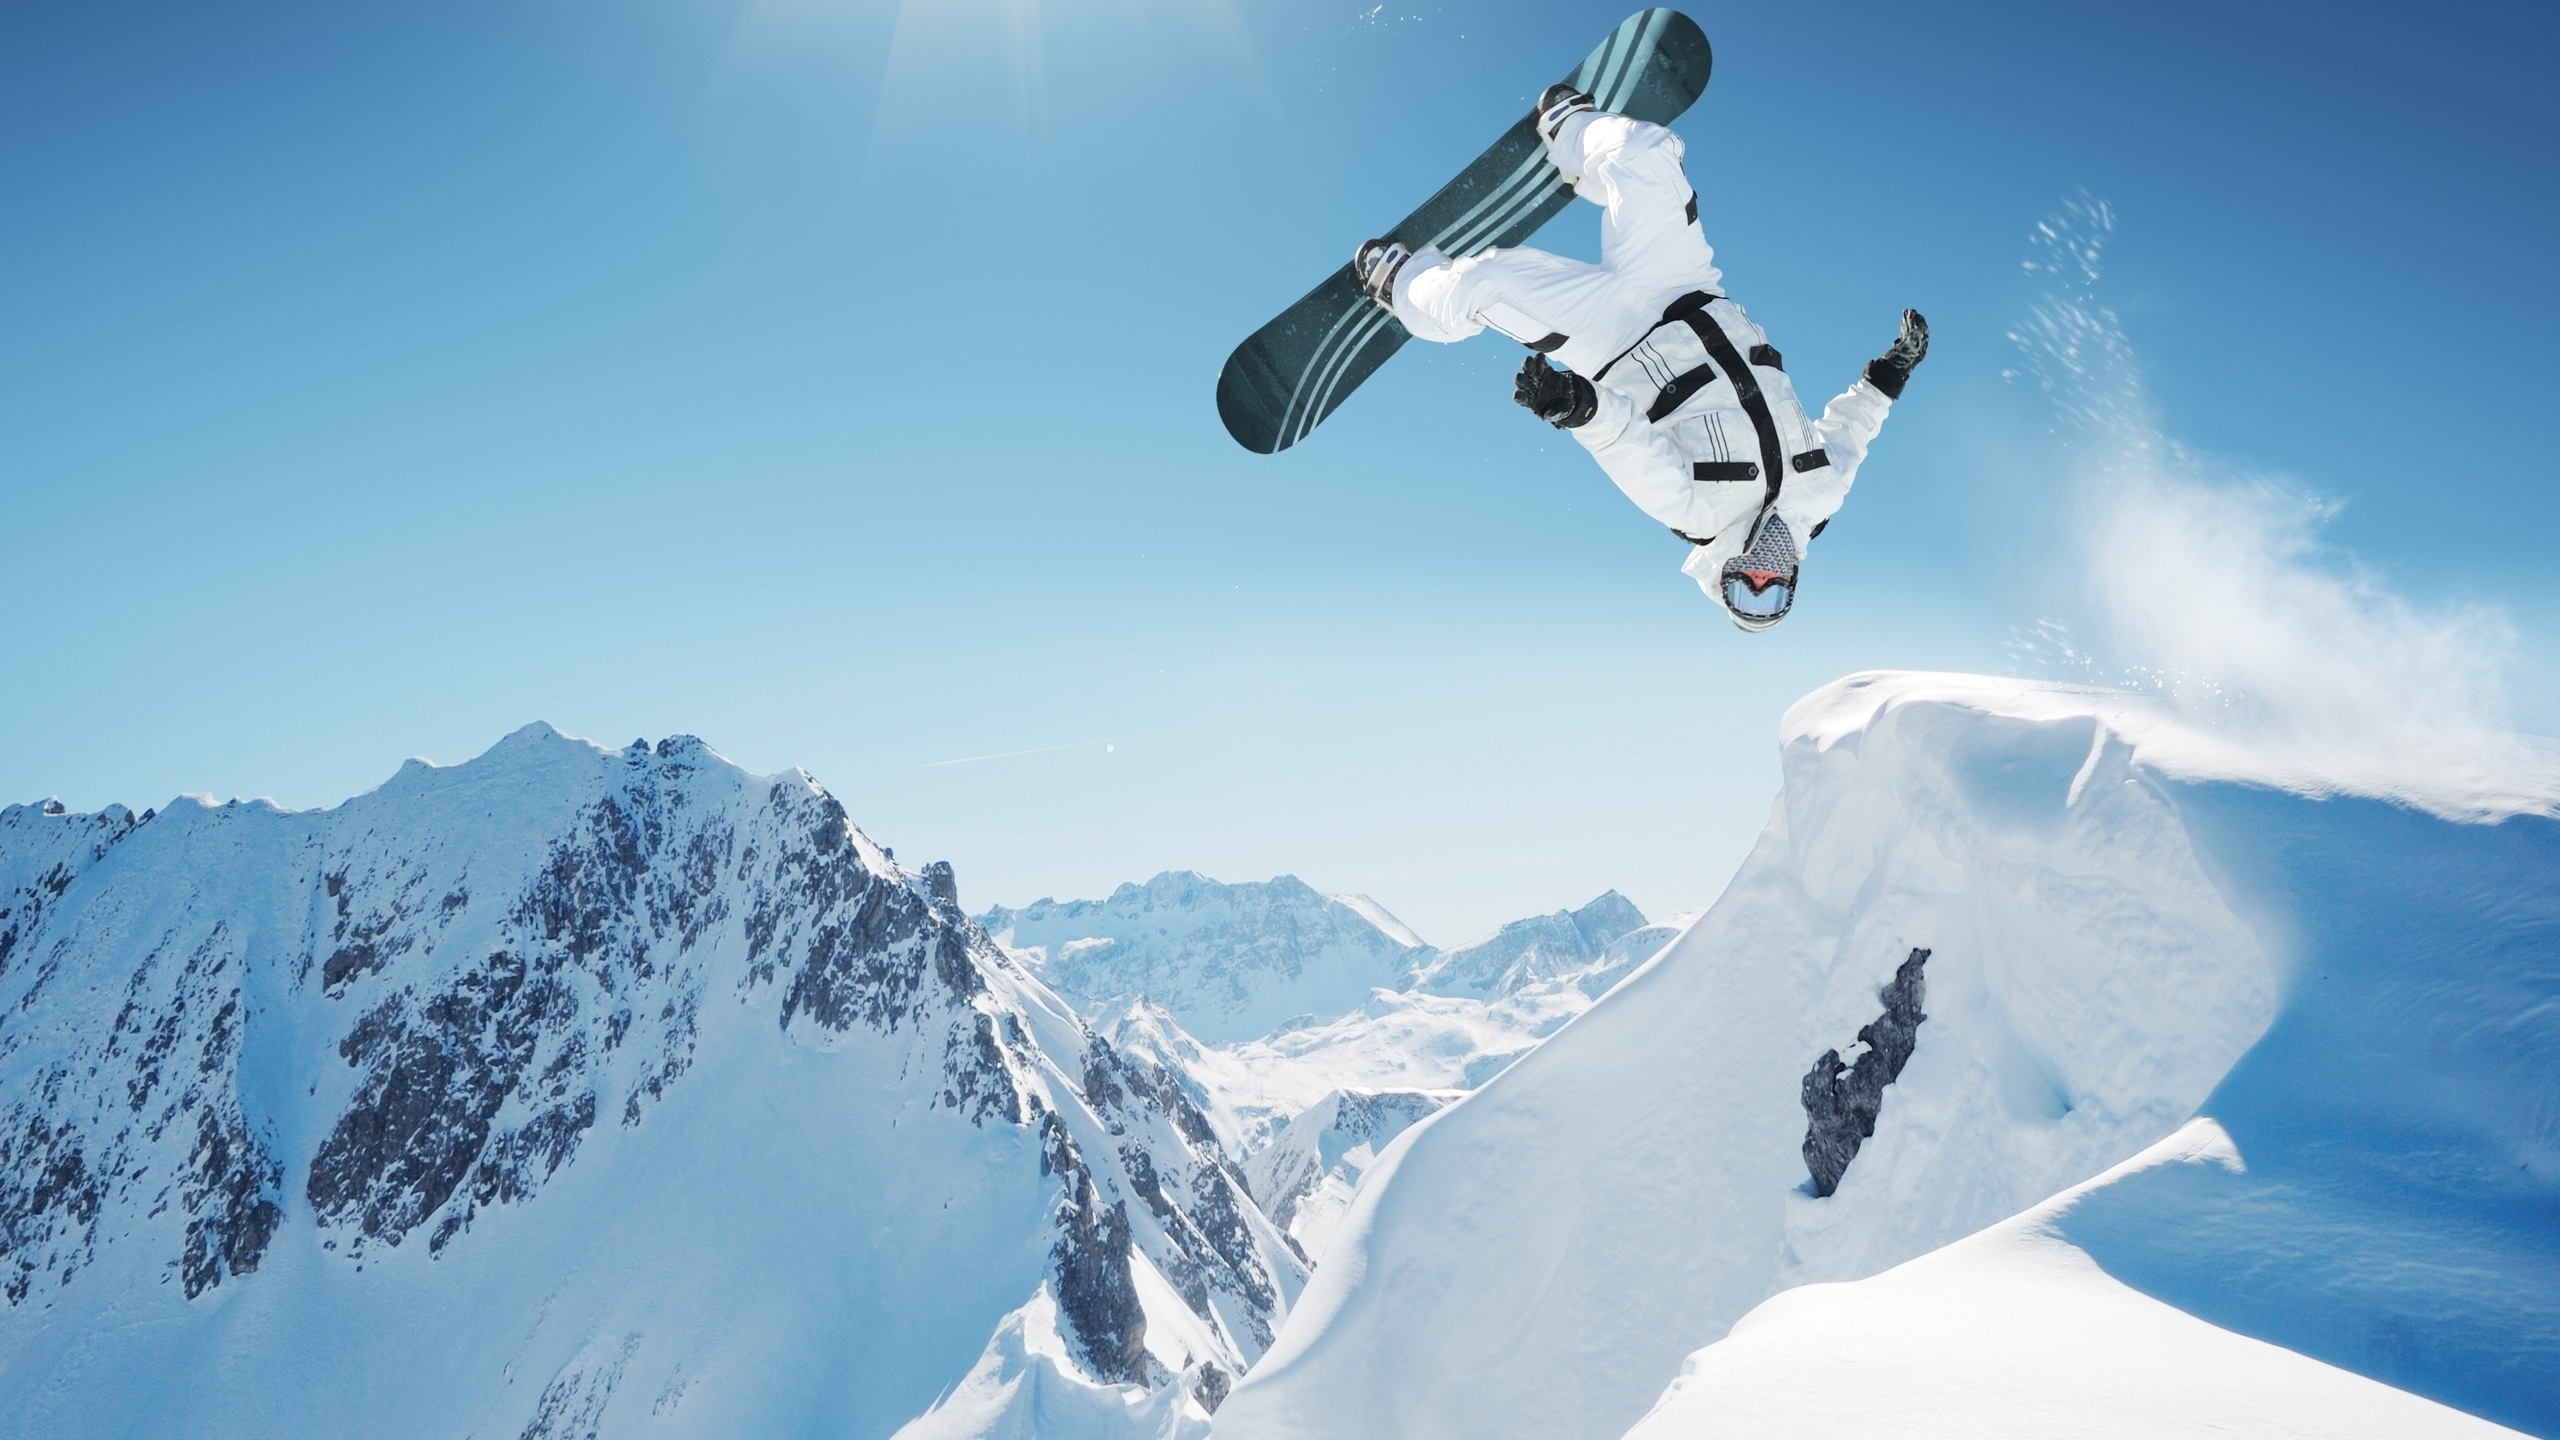 Snowboarding Adventure for 2560x1440 HDTV resolution